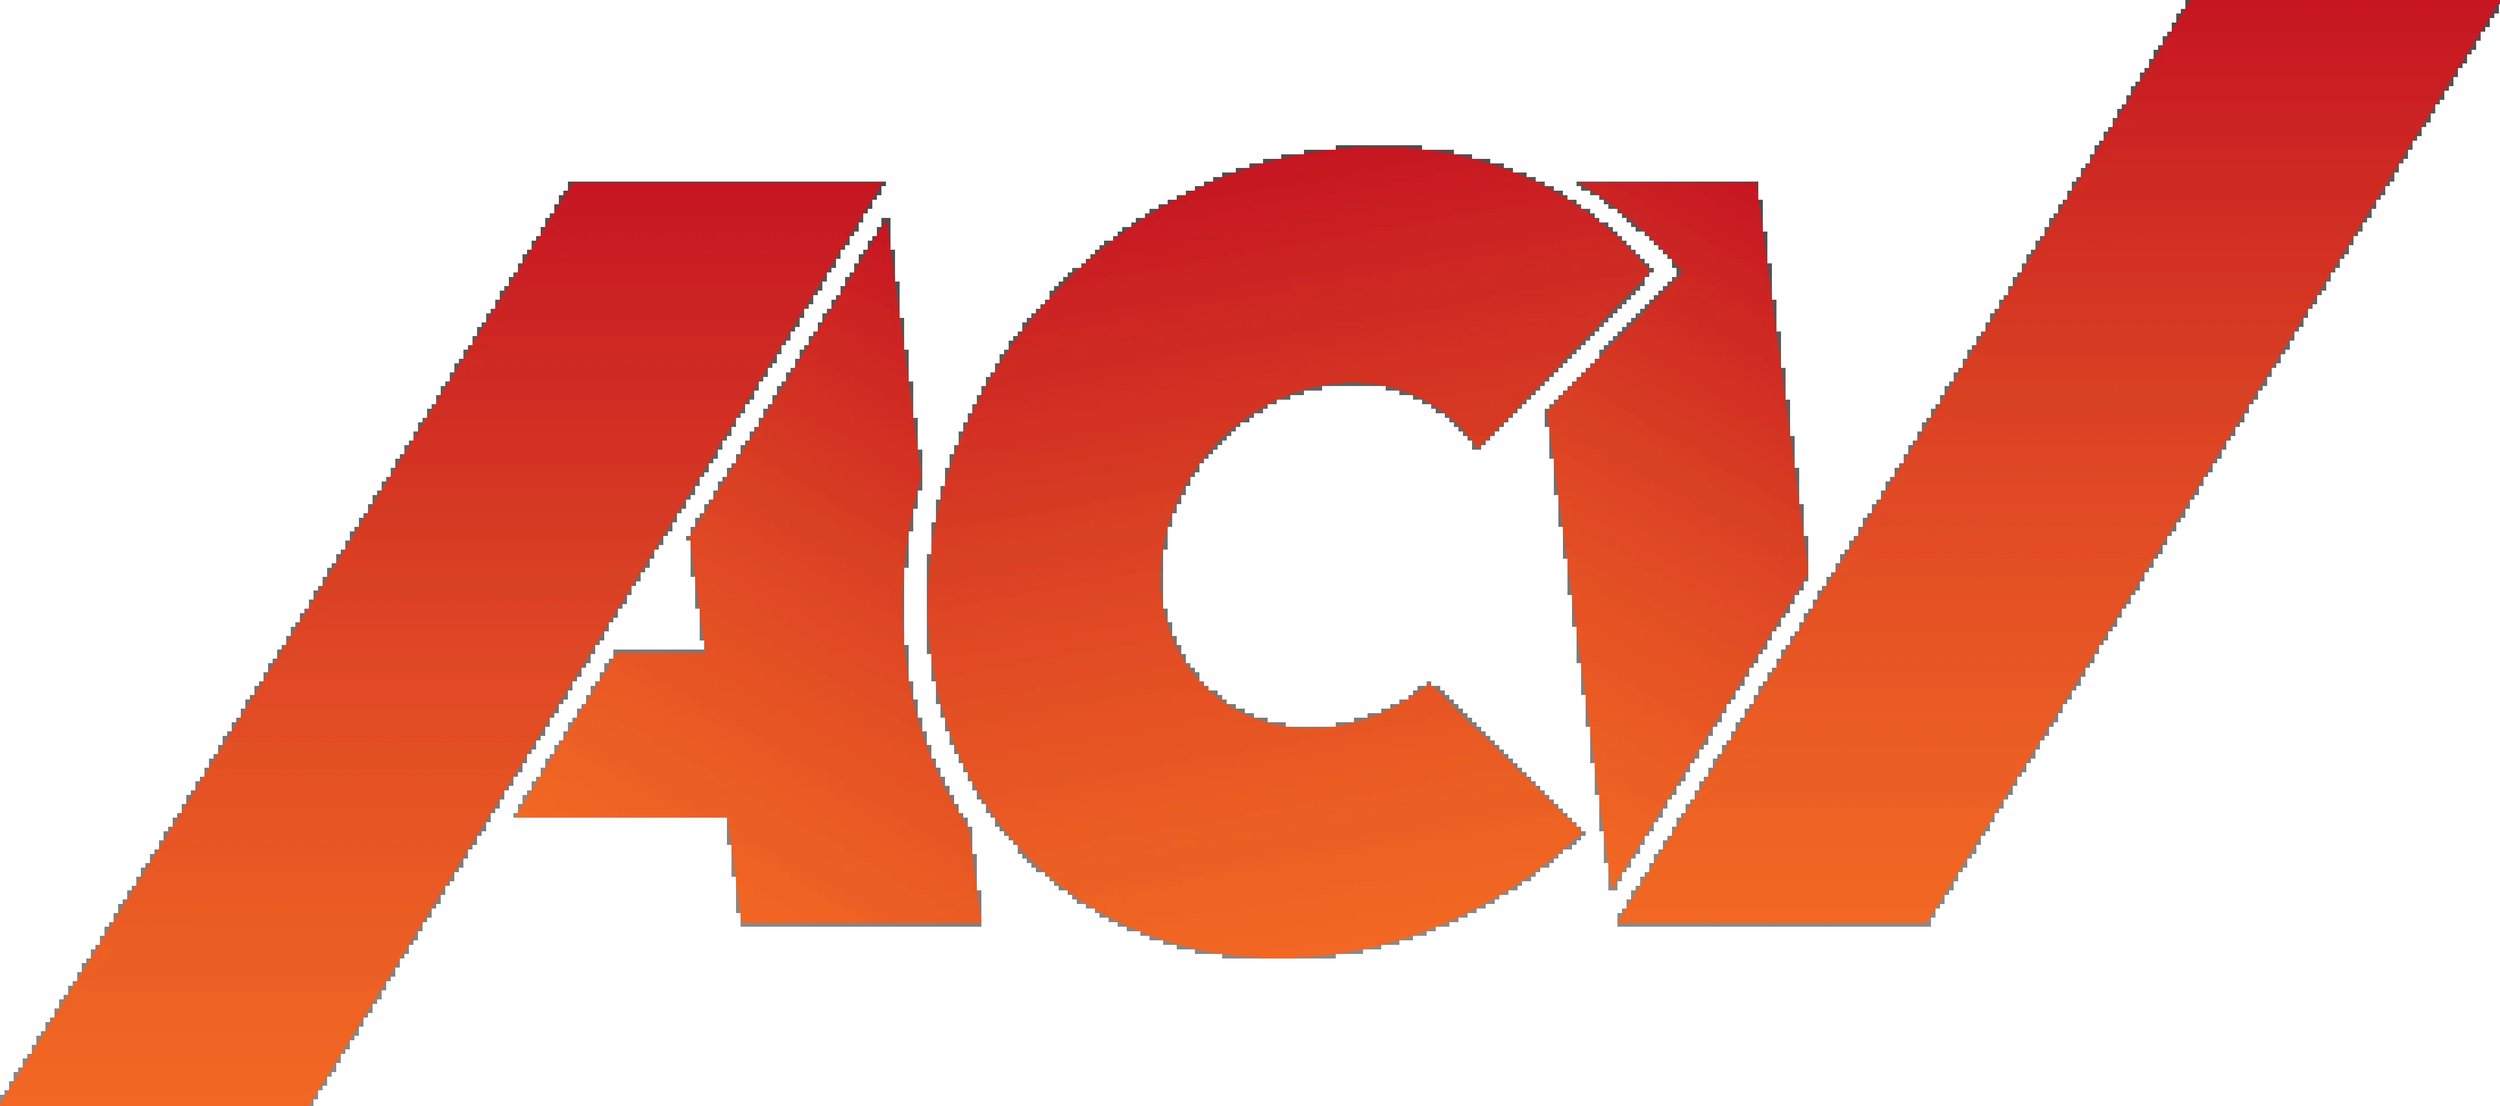 ACV logo.jpg